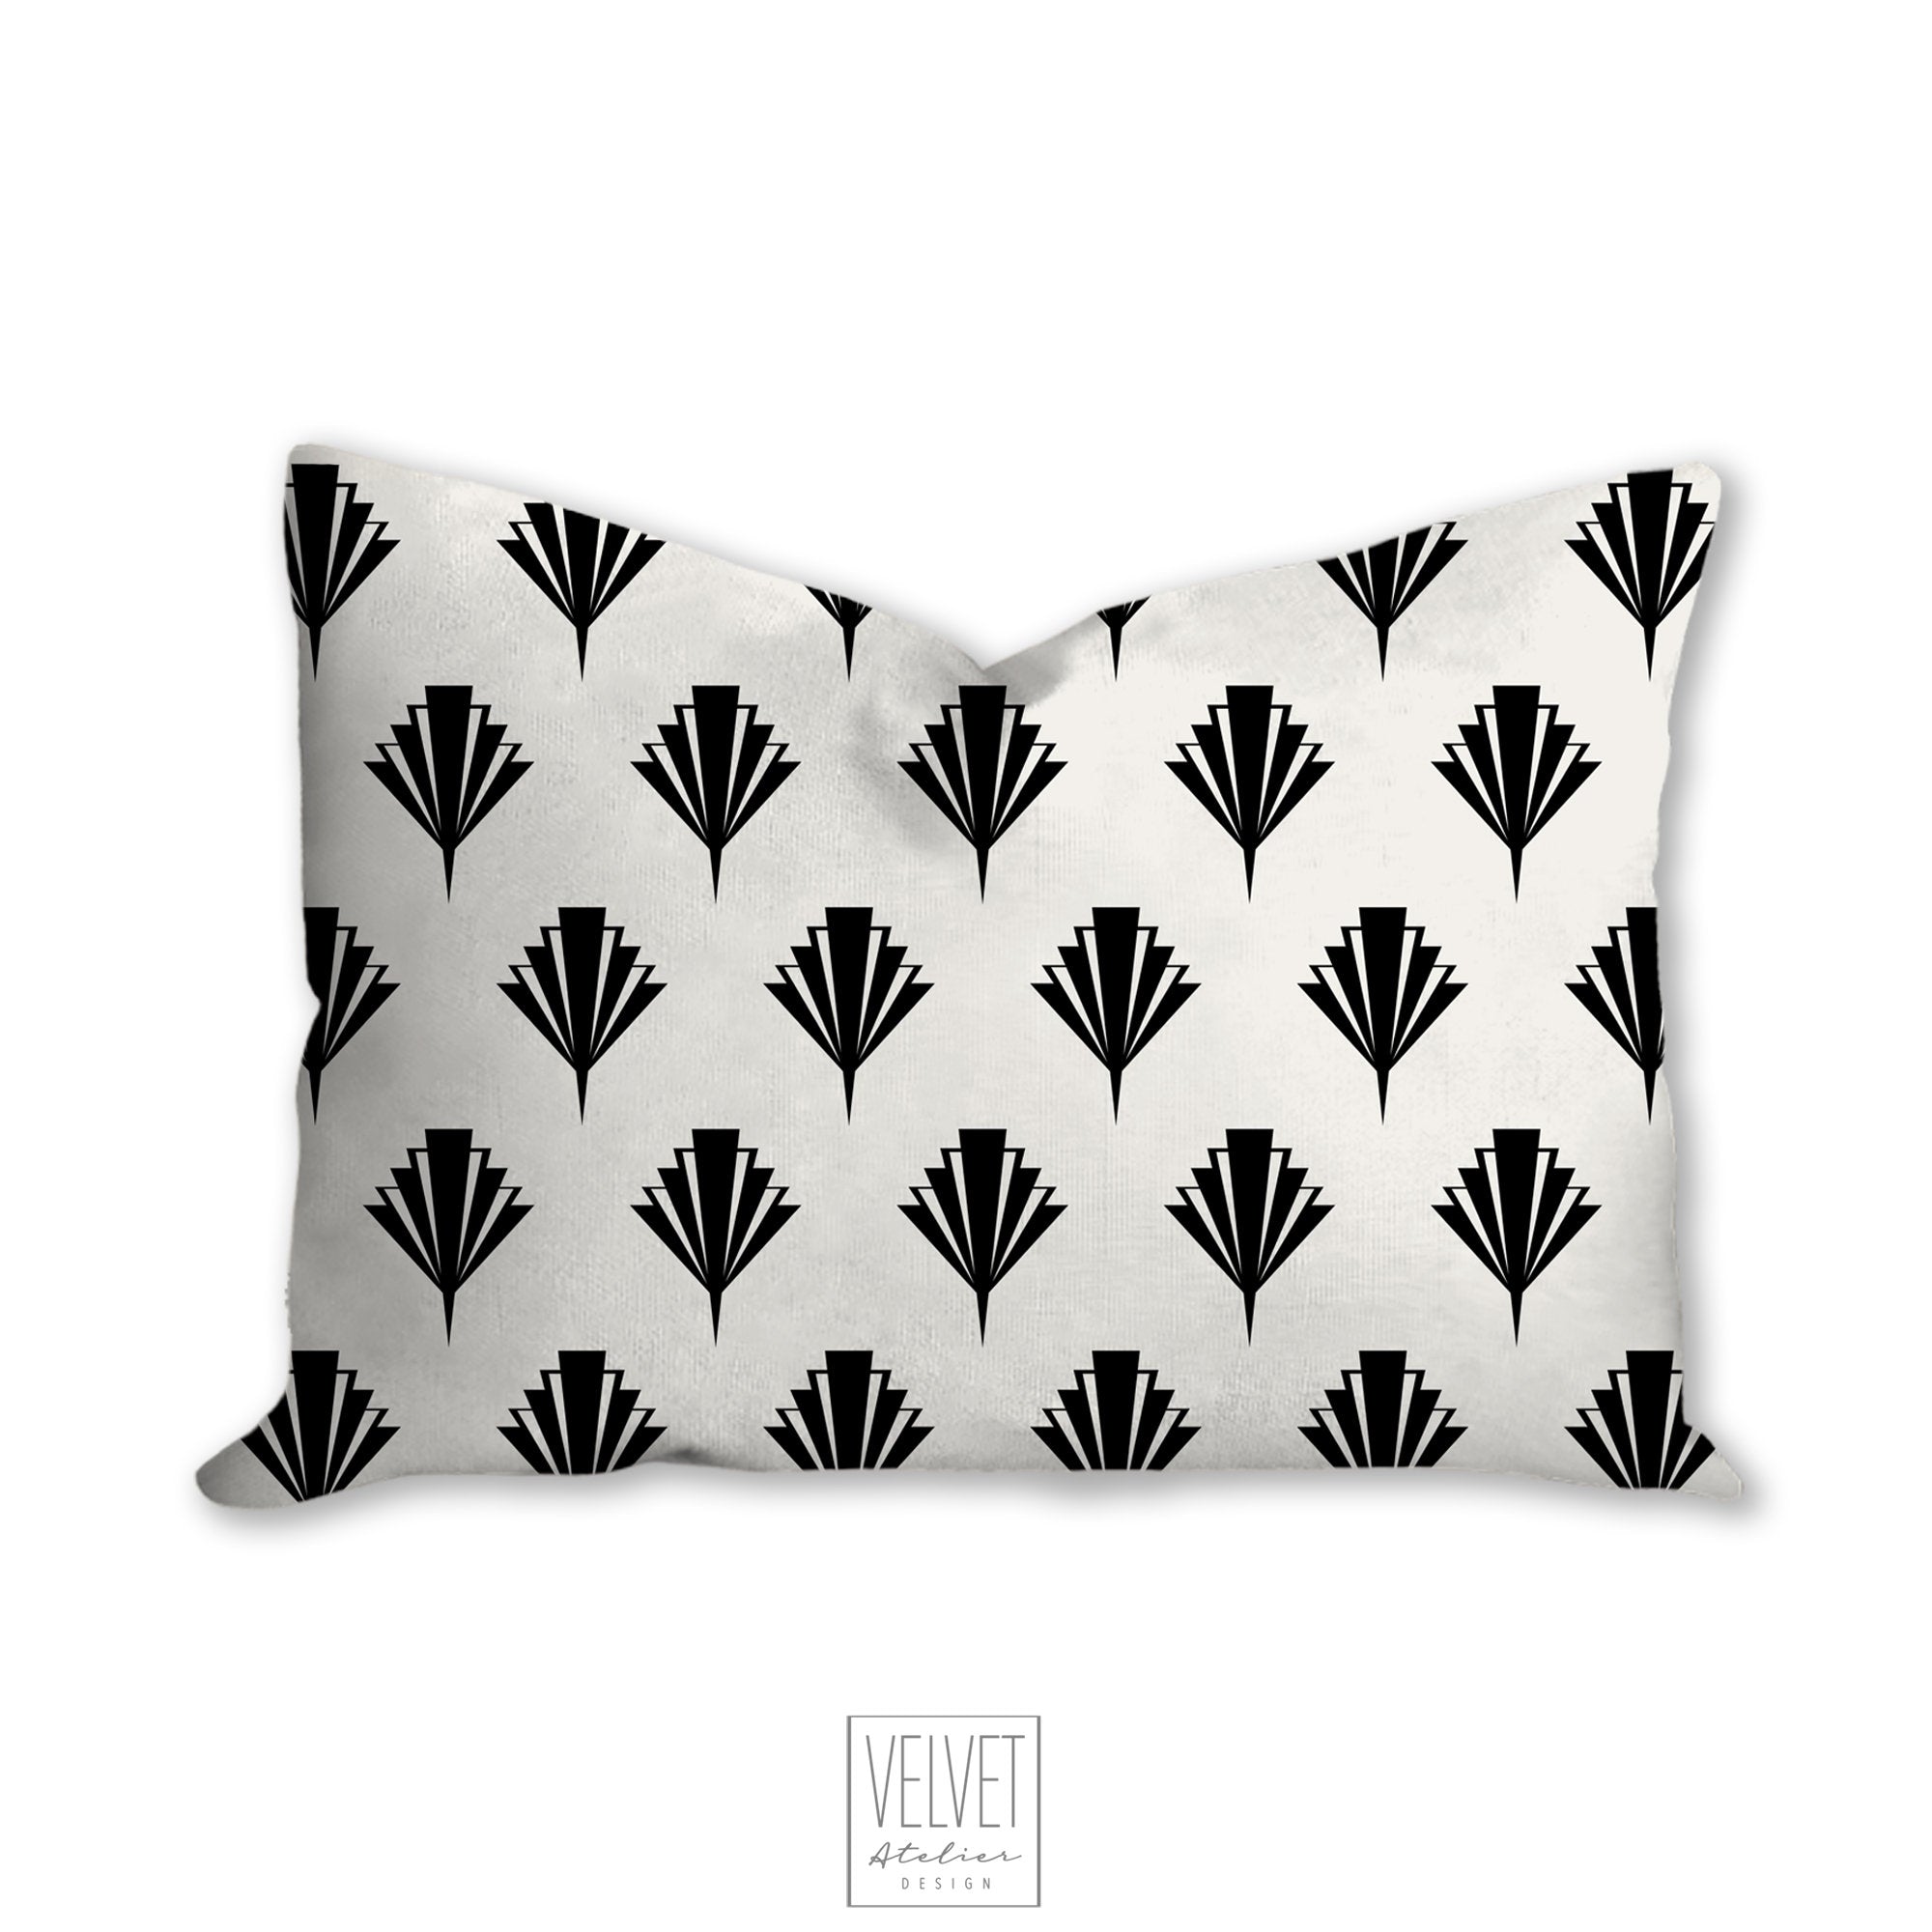 Black and White Throw Pillow Cover - Abstract Print - Velvet - Modern